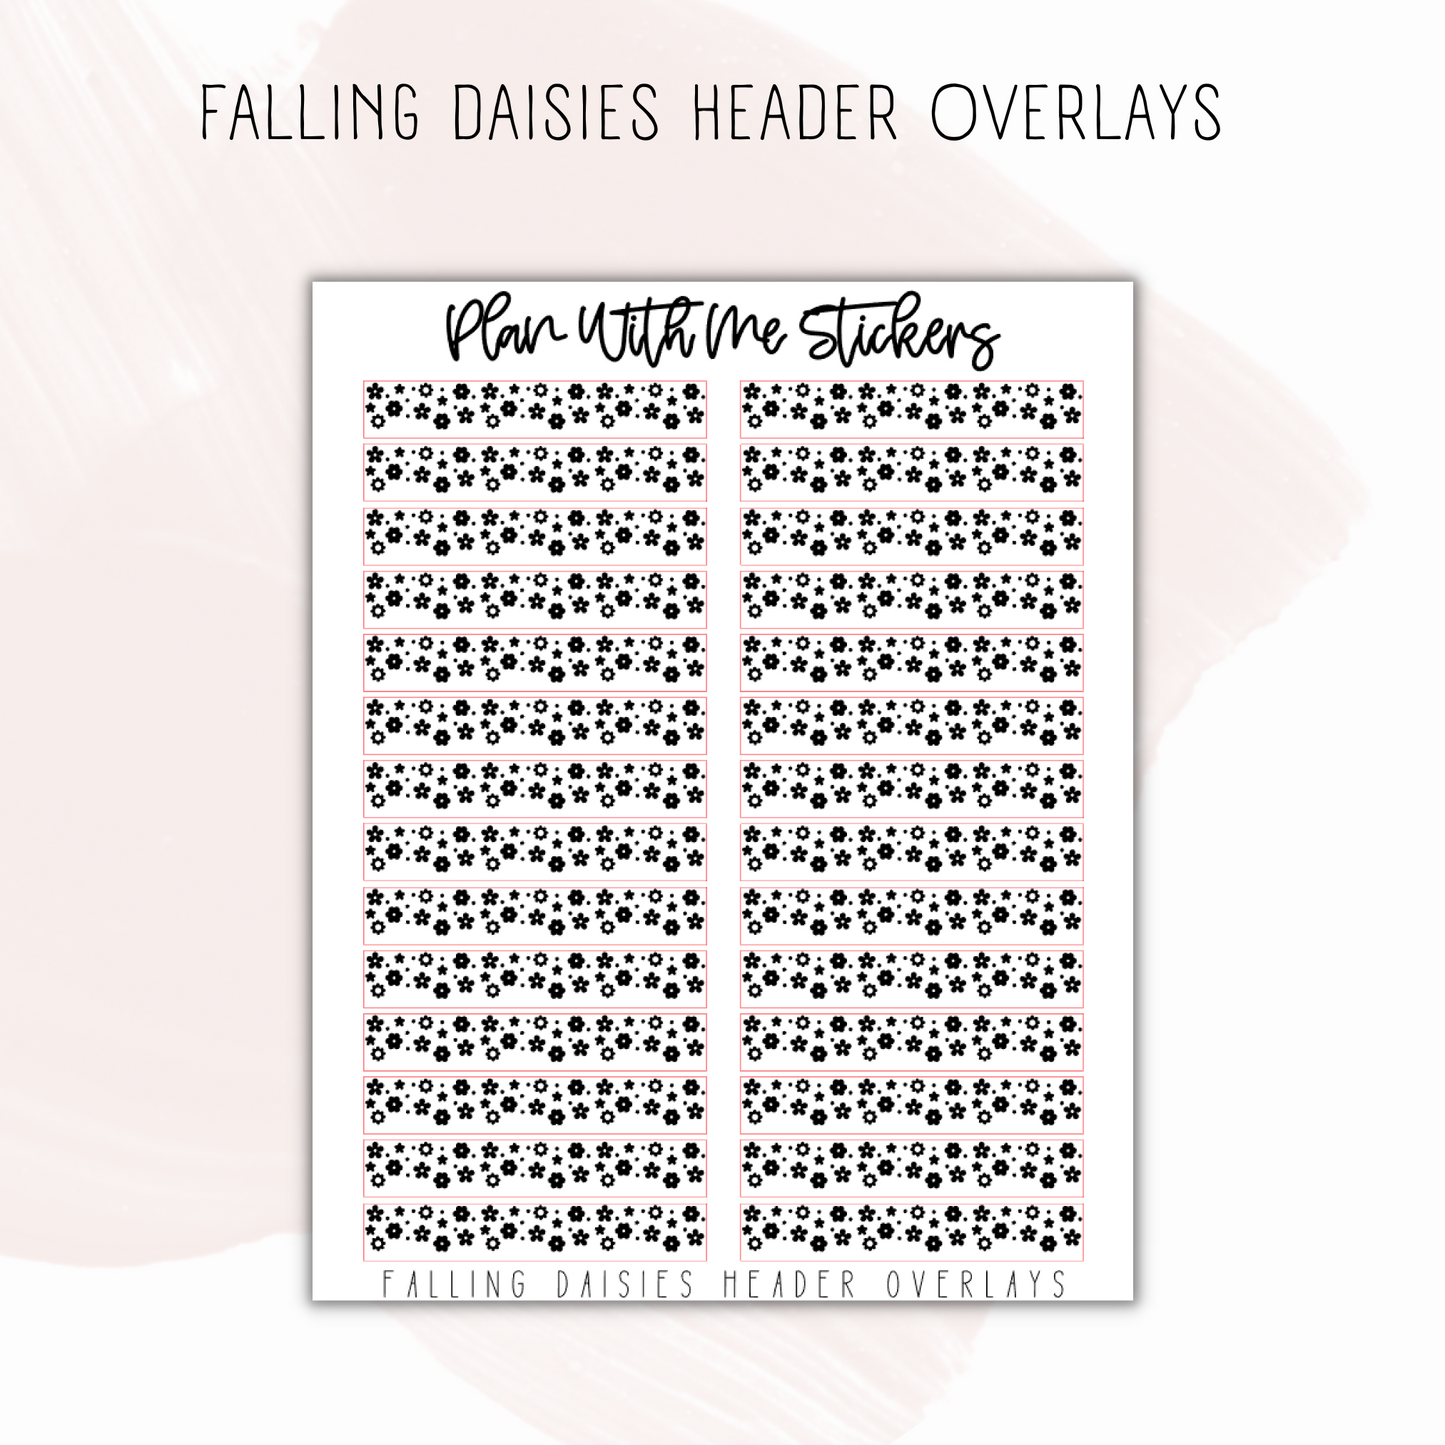 Falling Daisies Header Overlays